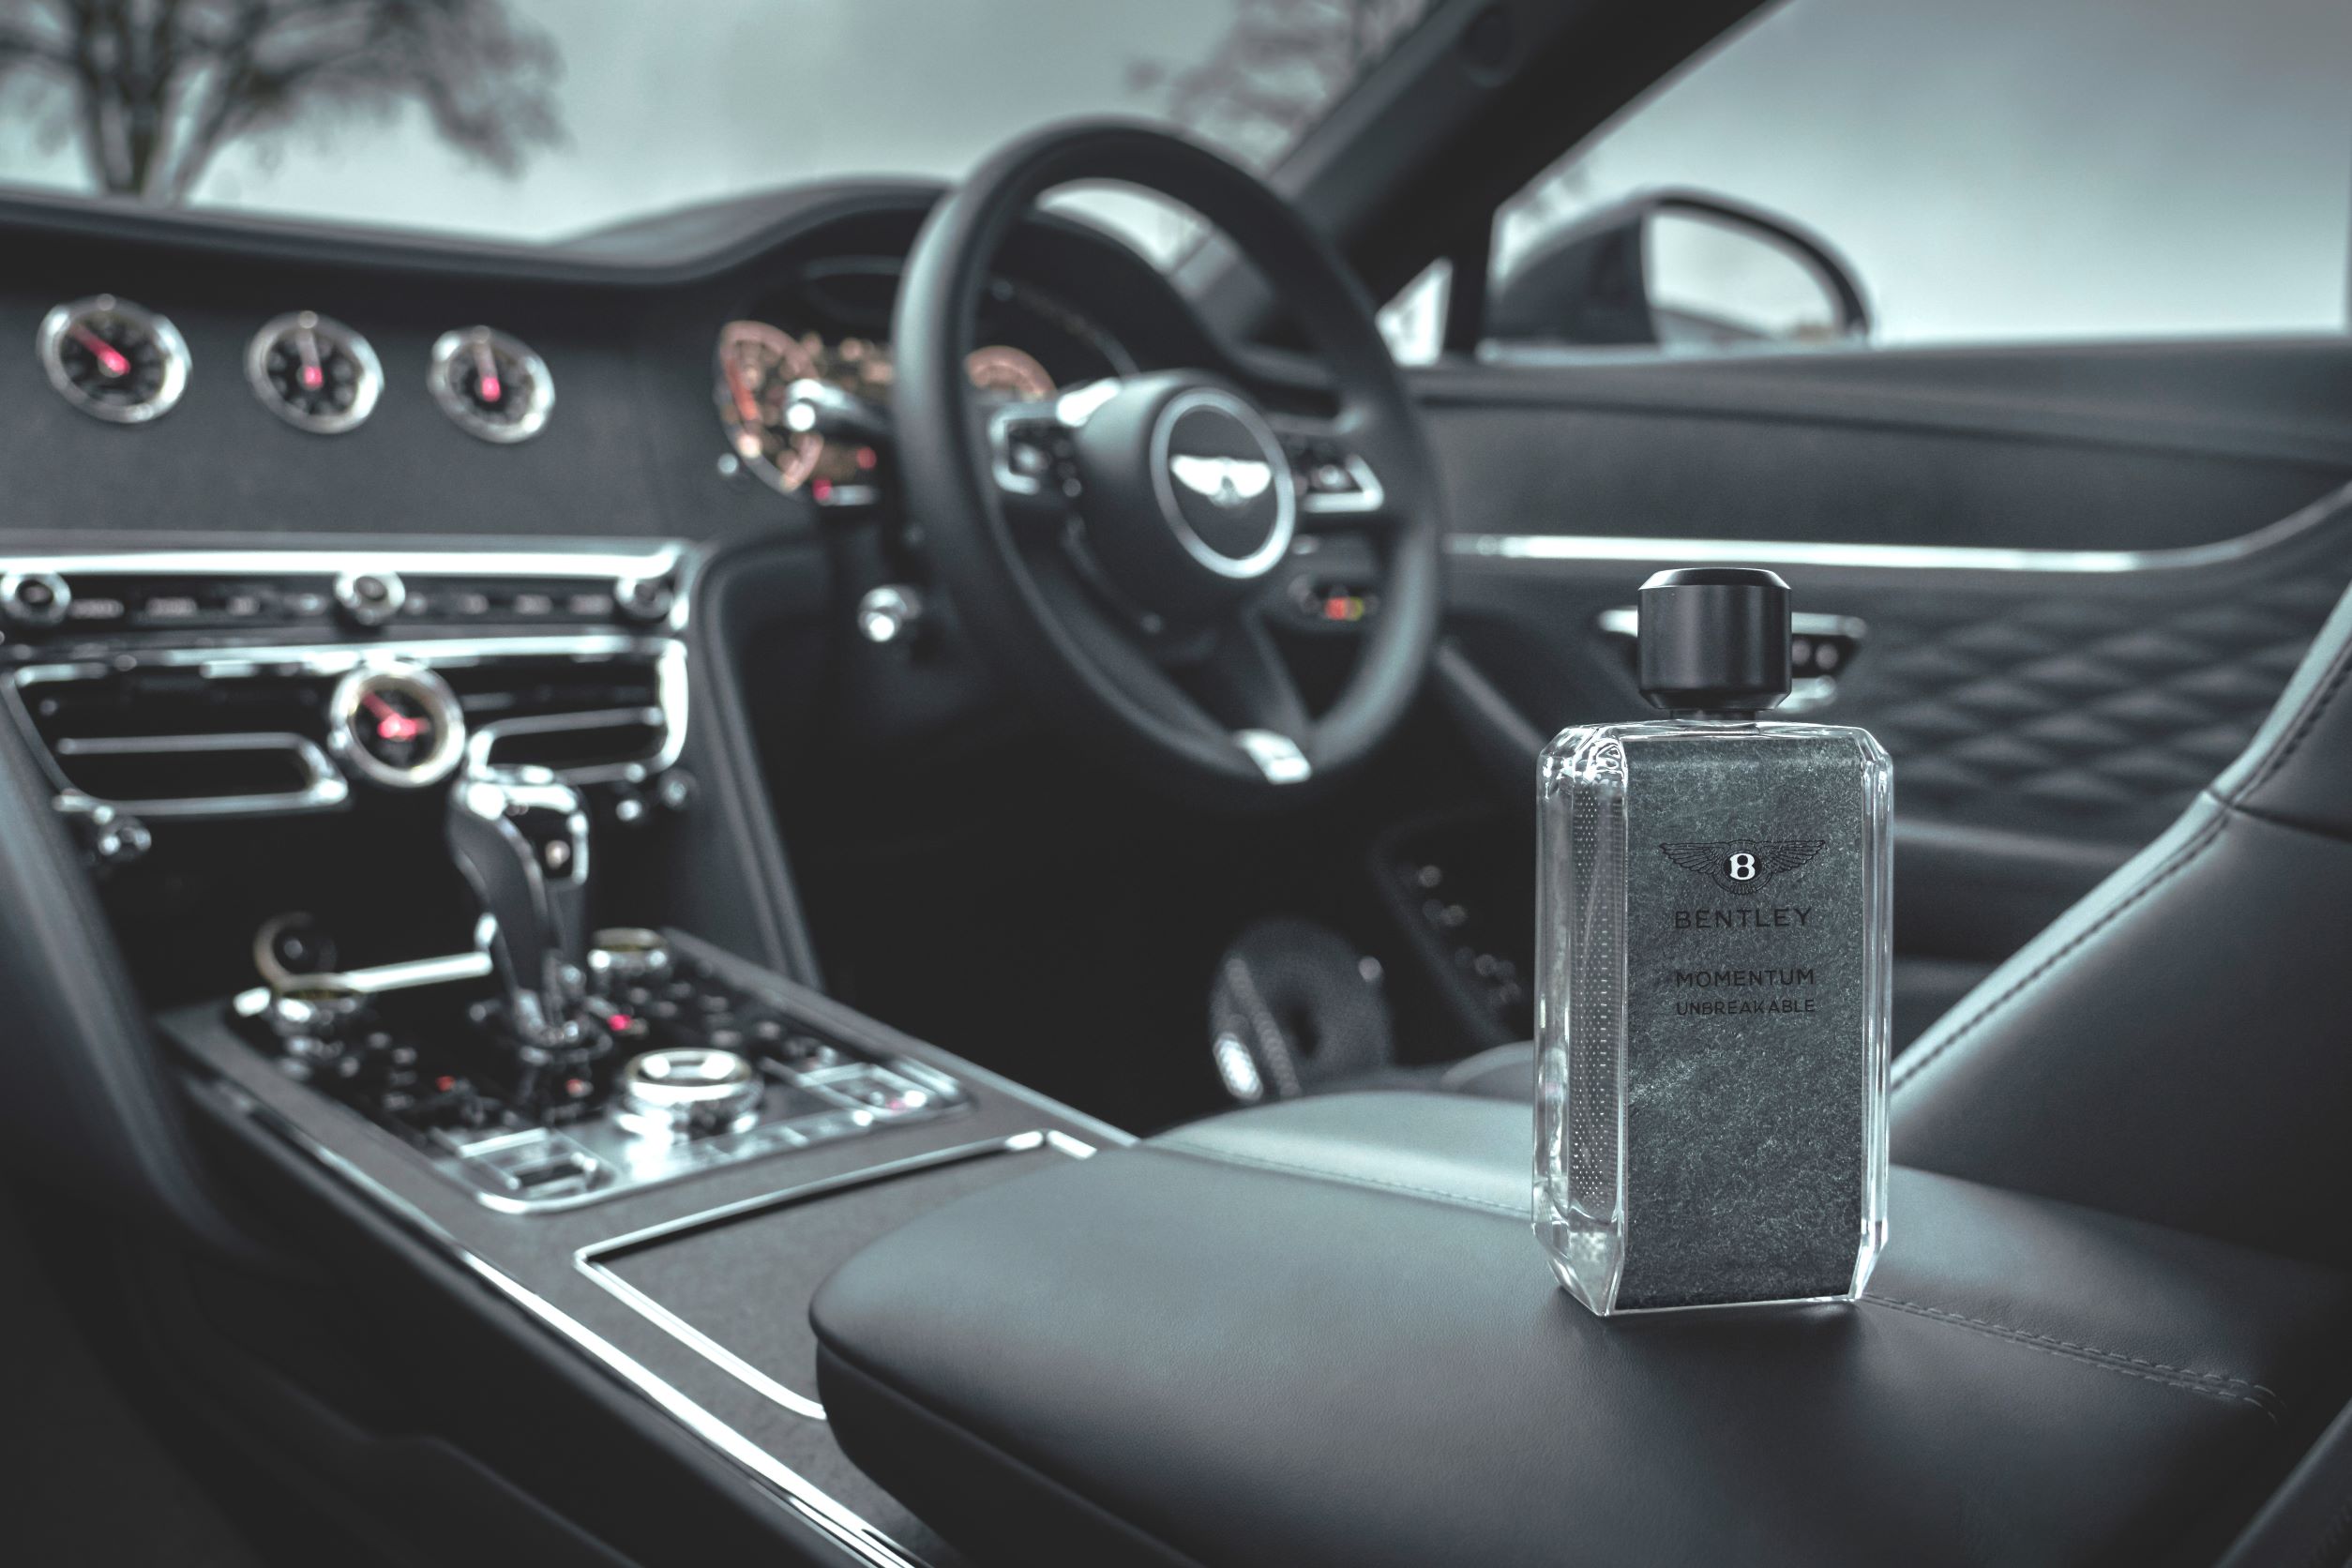 A photo of a bottle of Bentley Momentum Unbreakable Eau de Parfum on the central armrest of a Bentley.